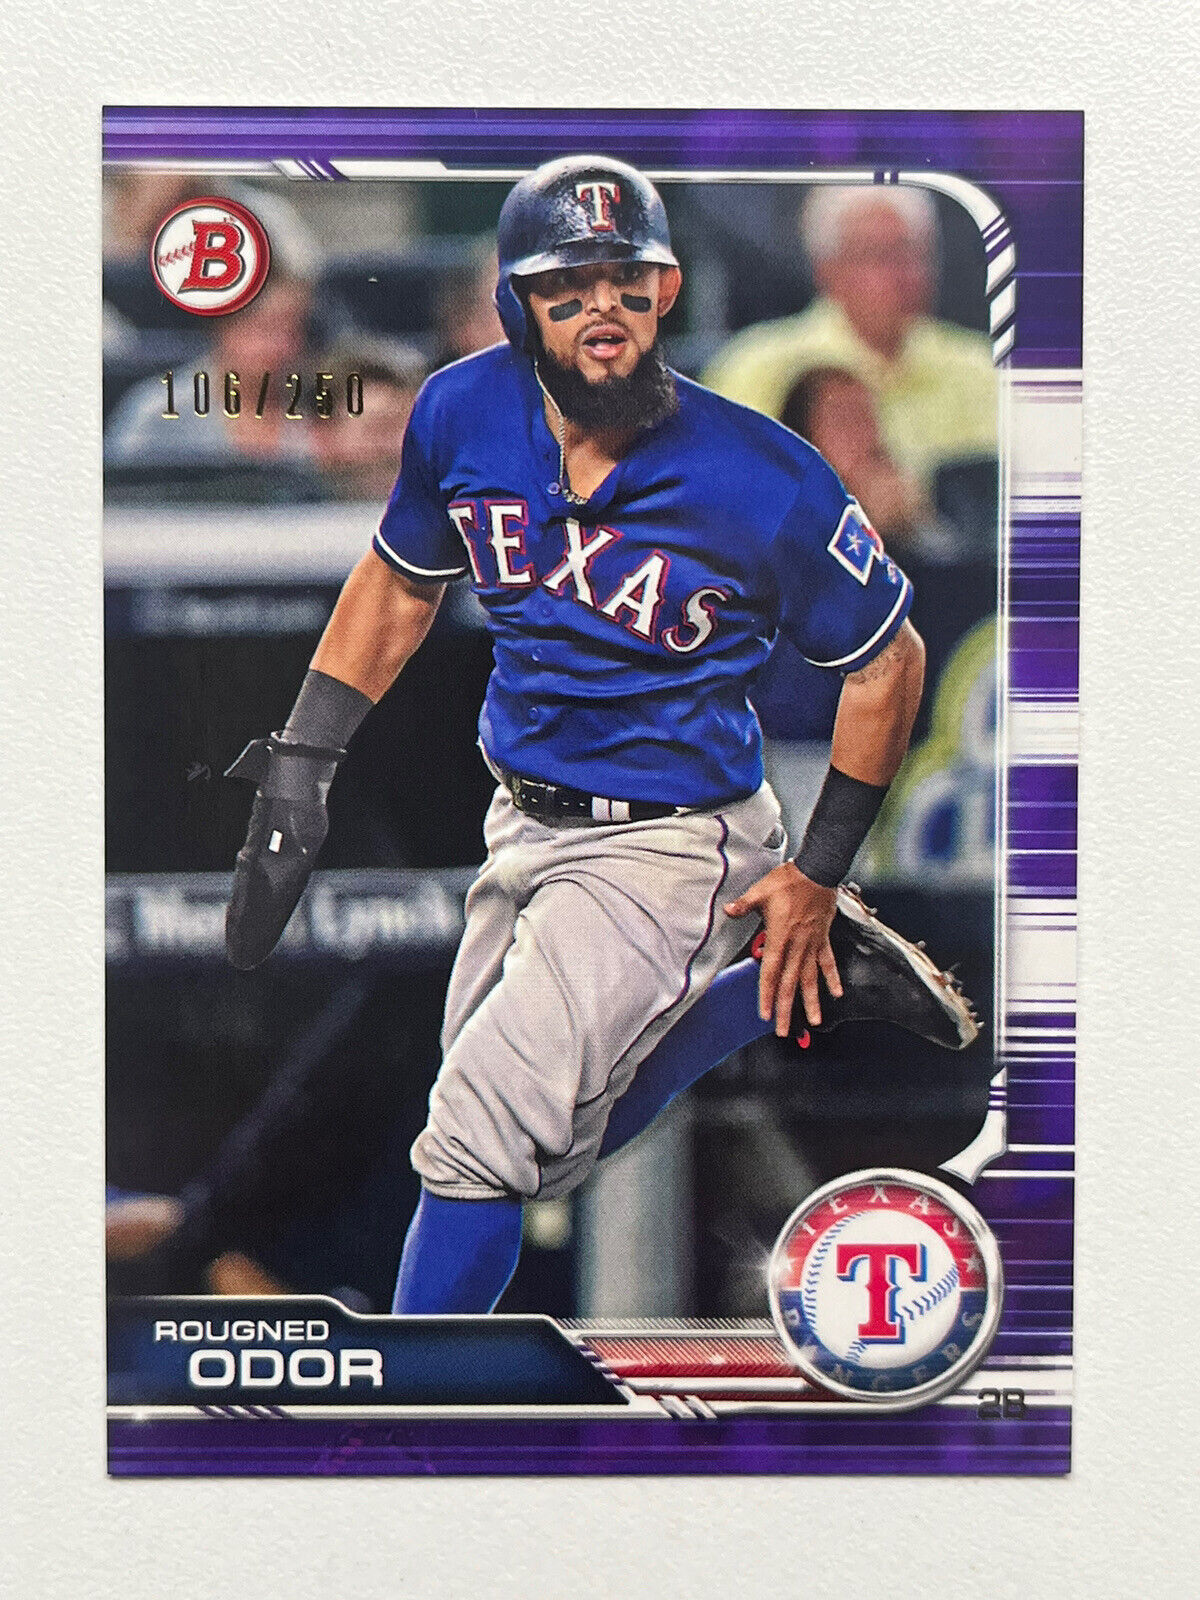 2019 Bowman Purple #77 Rougned Odor /250 Texas Rangers Baseball Card